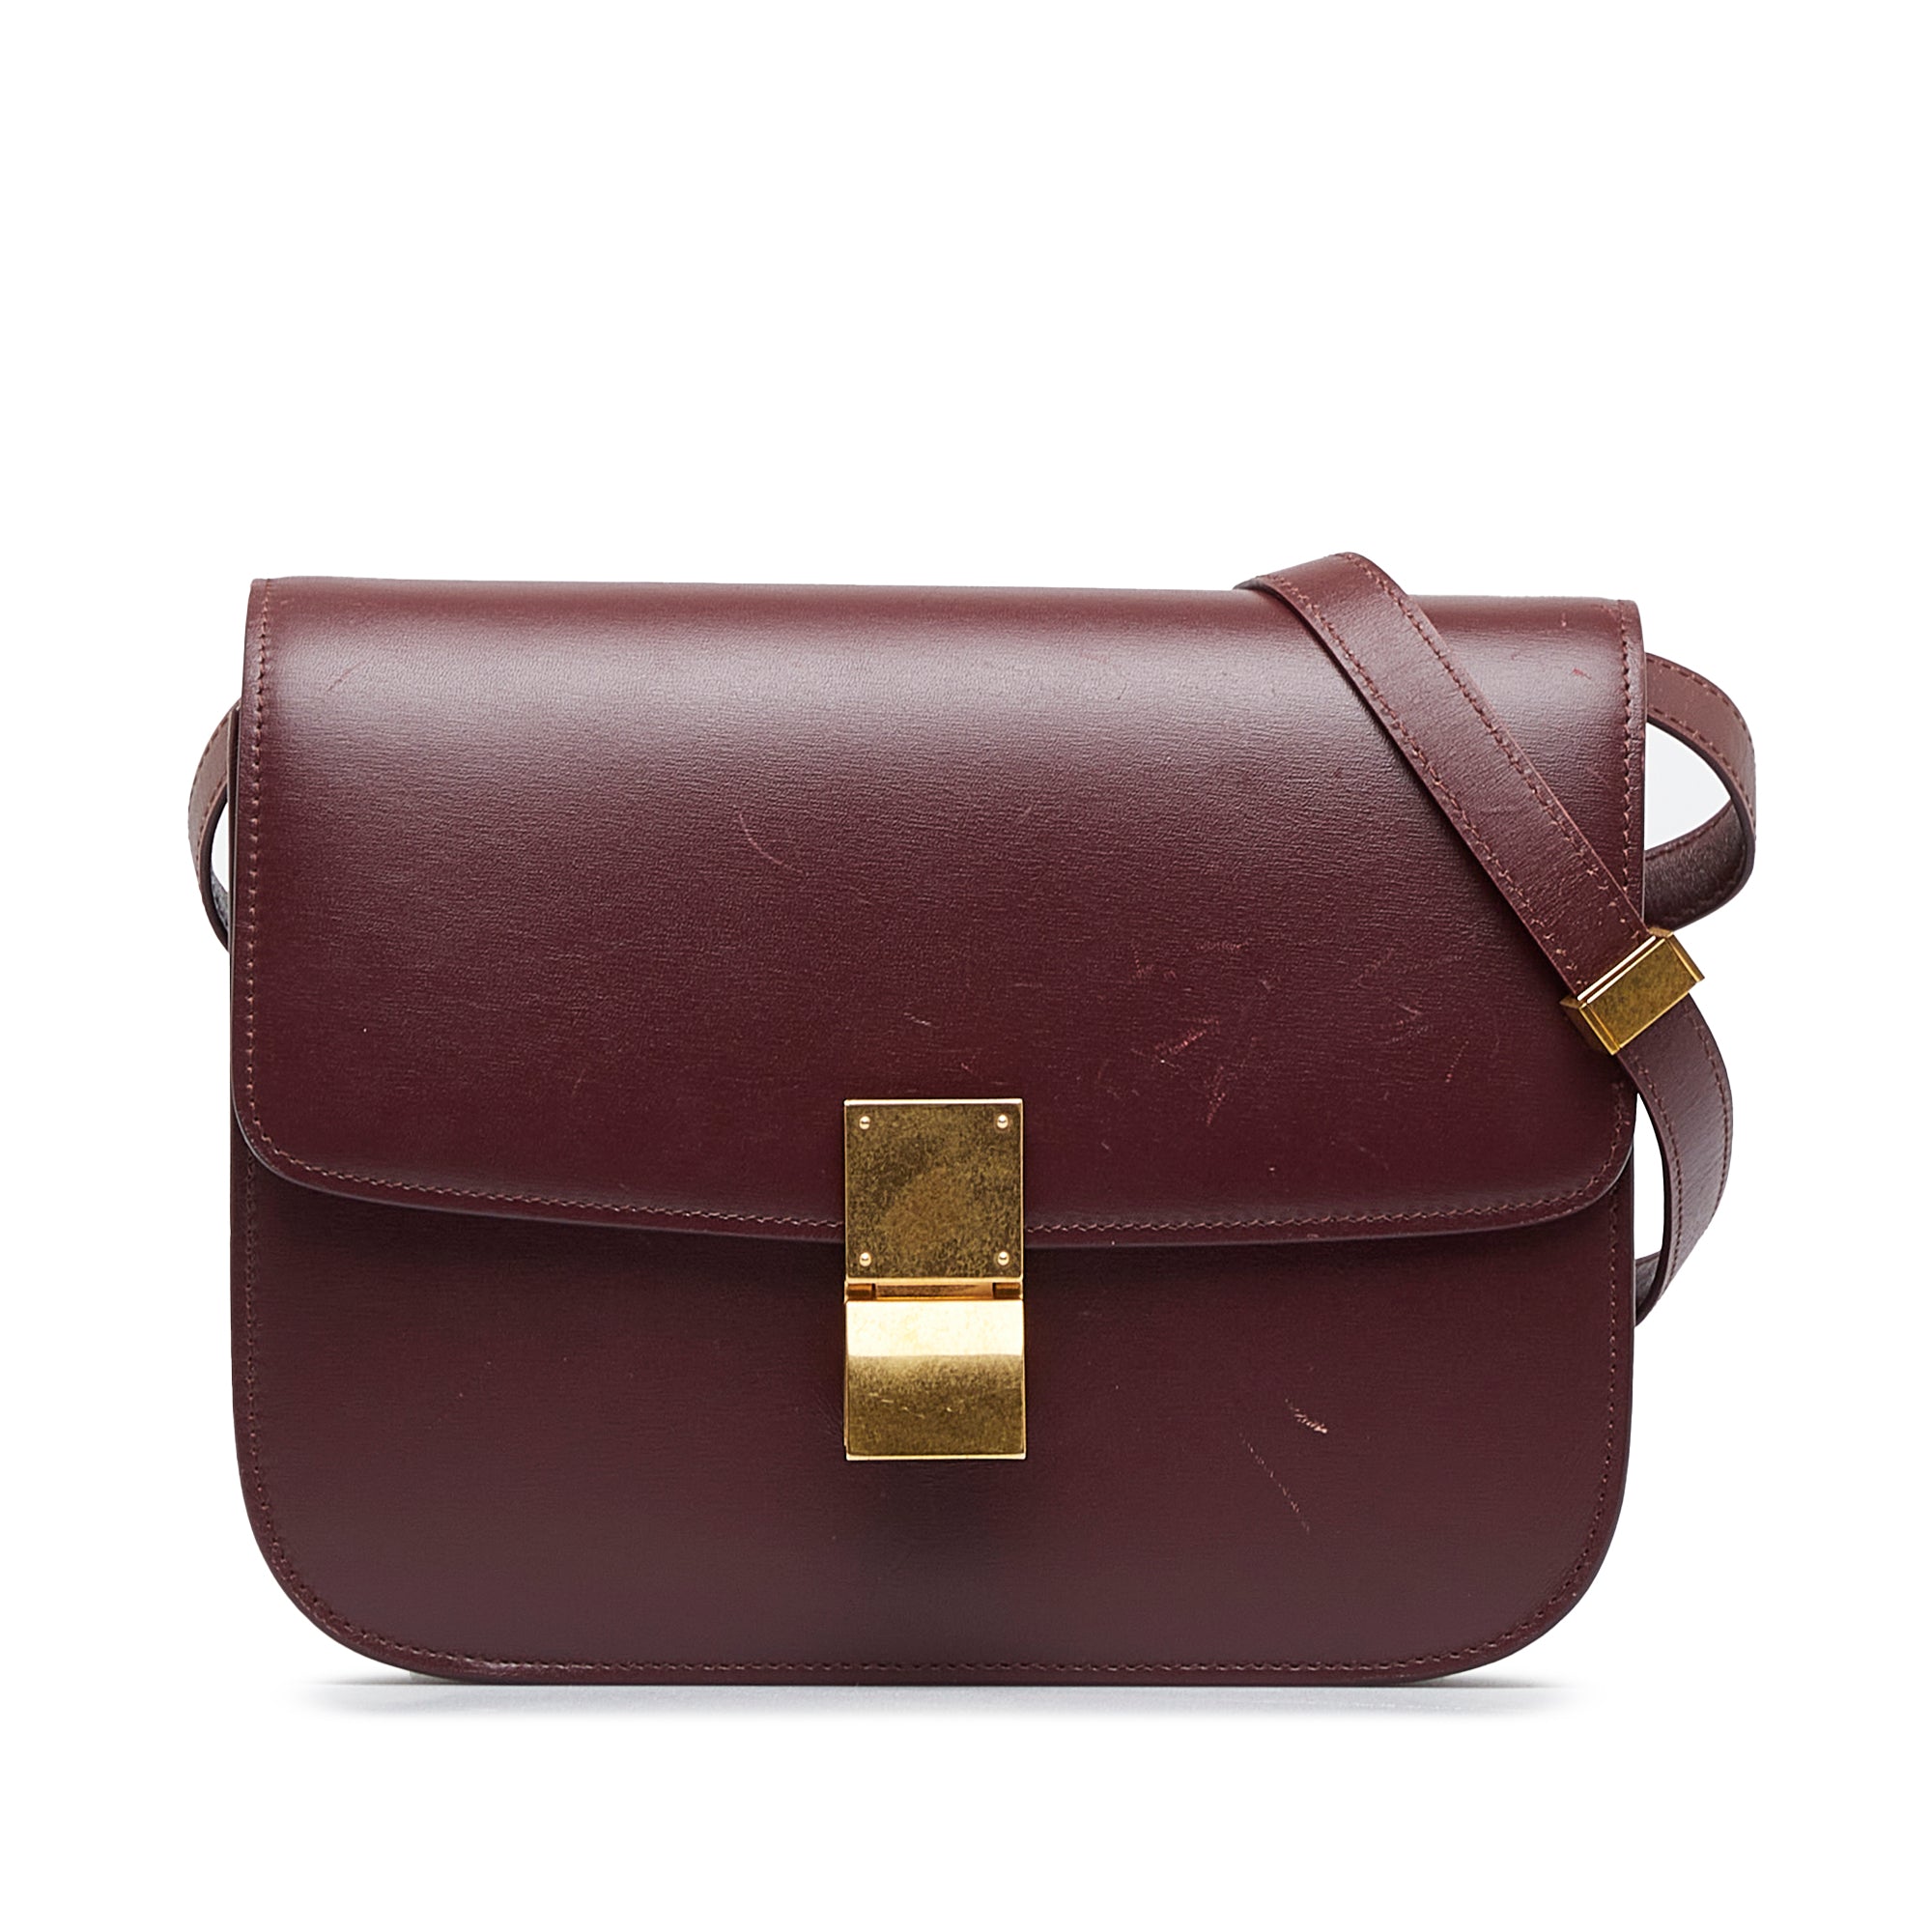 Celine Medium Classic Box Leather Crossbody Bag